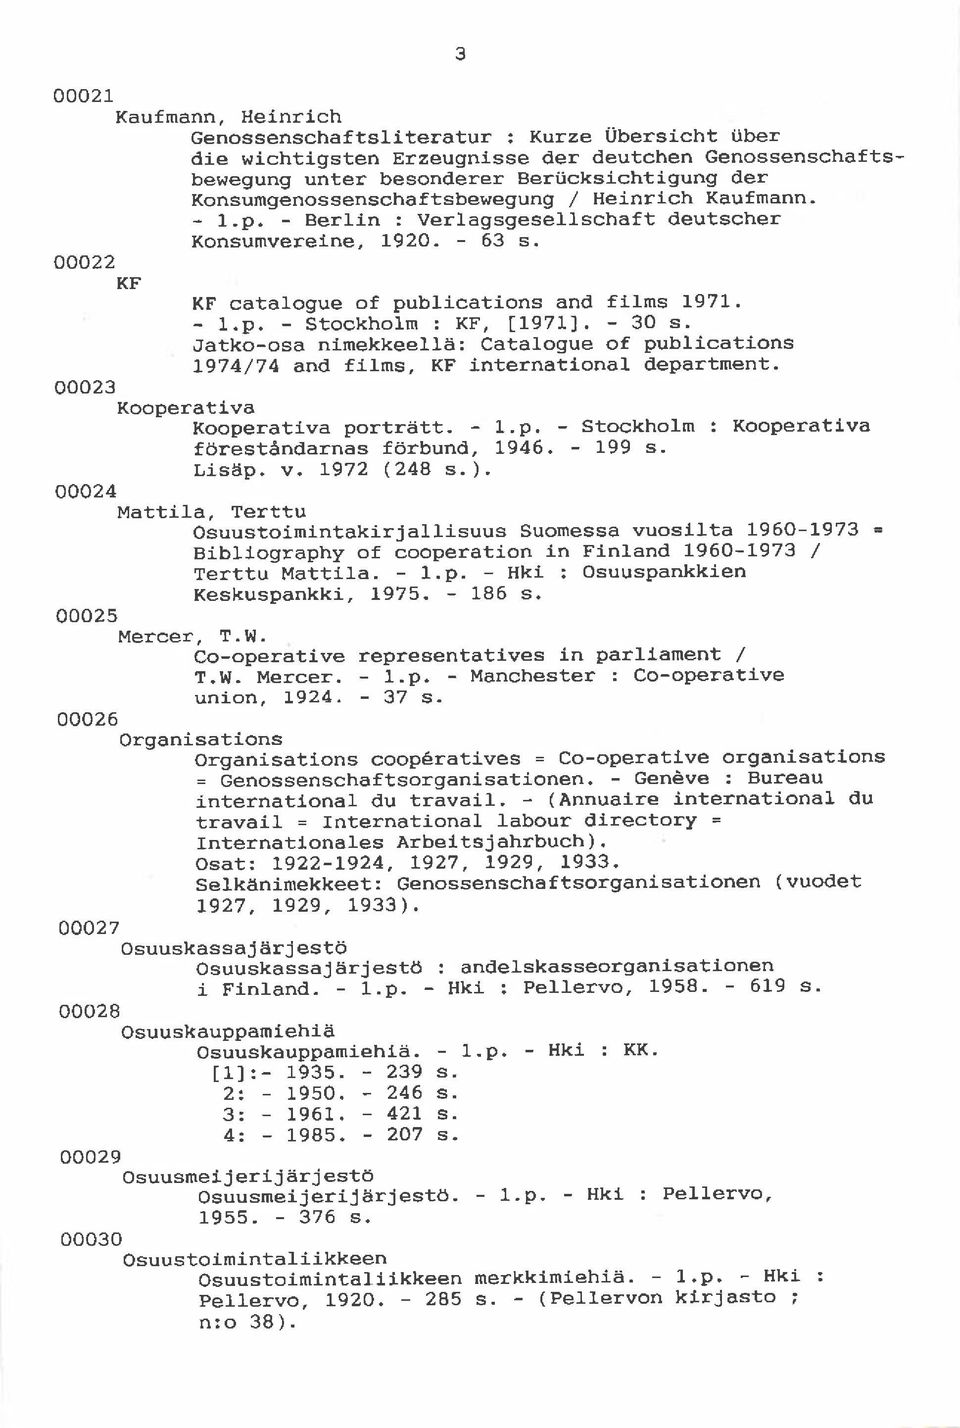 - 30 s' Jatko-osa nimekkeellai: Catalogue of publications 1974/74 and films, KF international department. ooo23 Kooperativa Kooperativa portriitt. - l-'p.